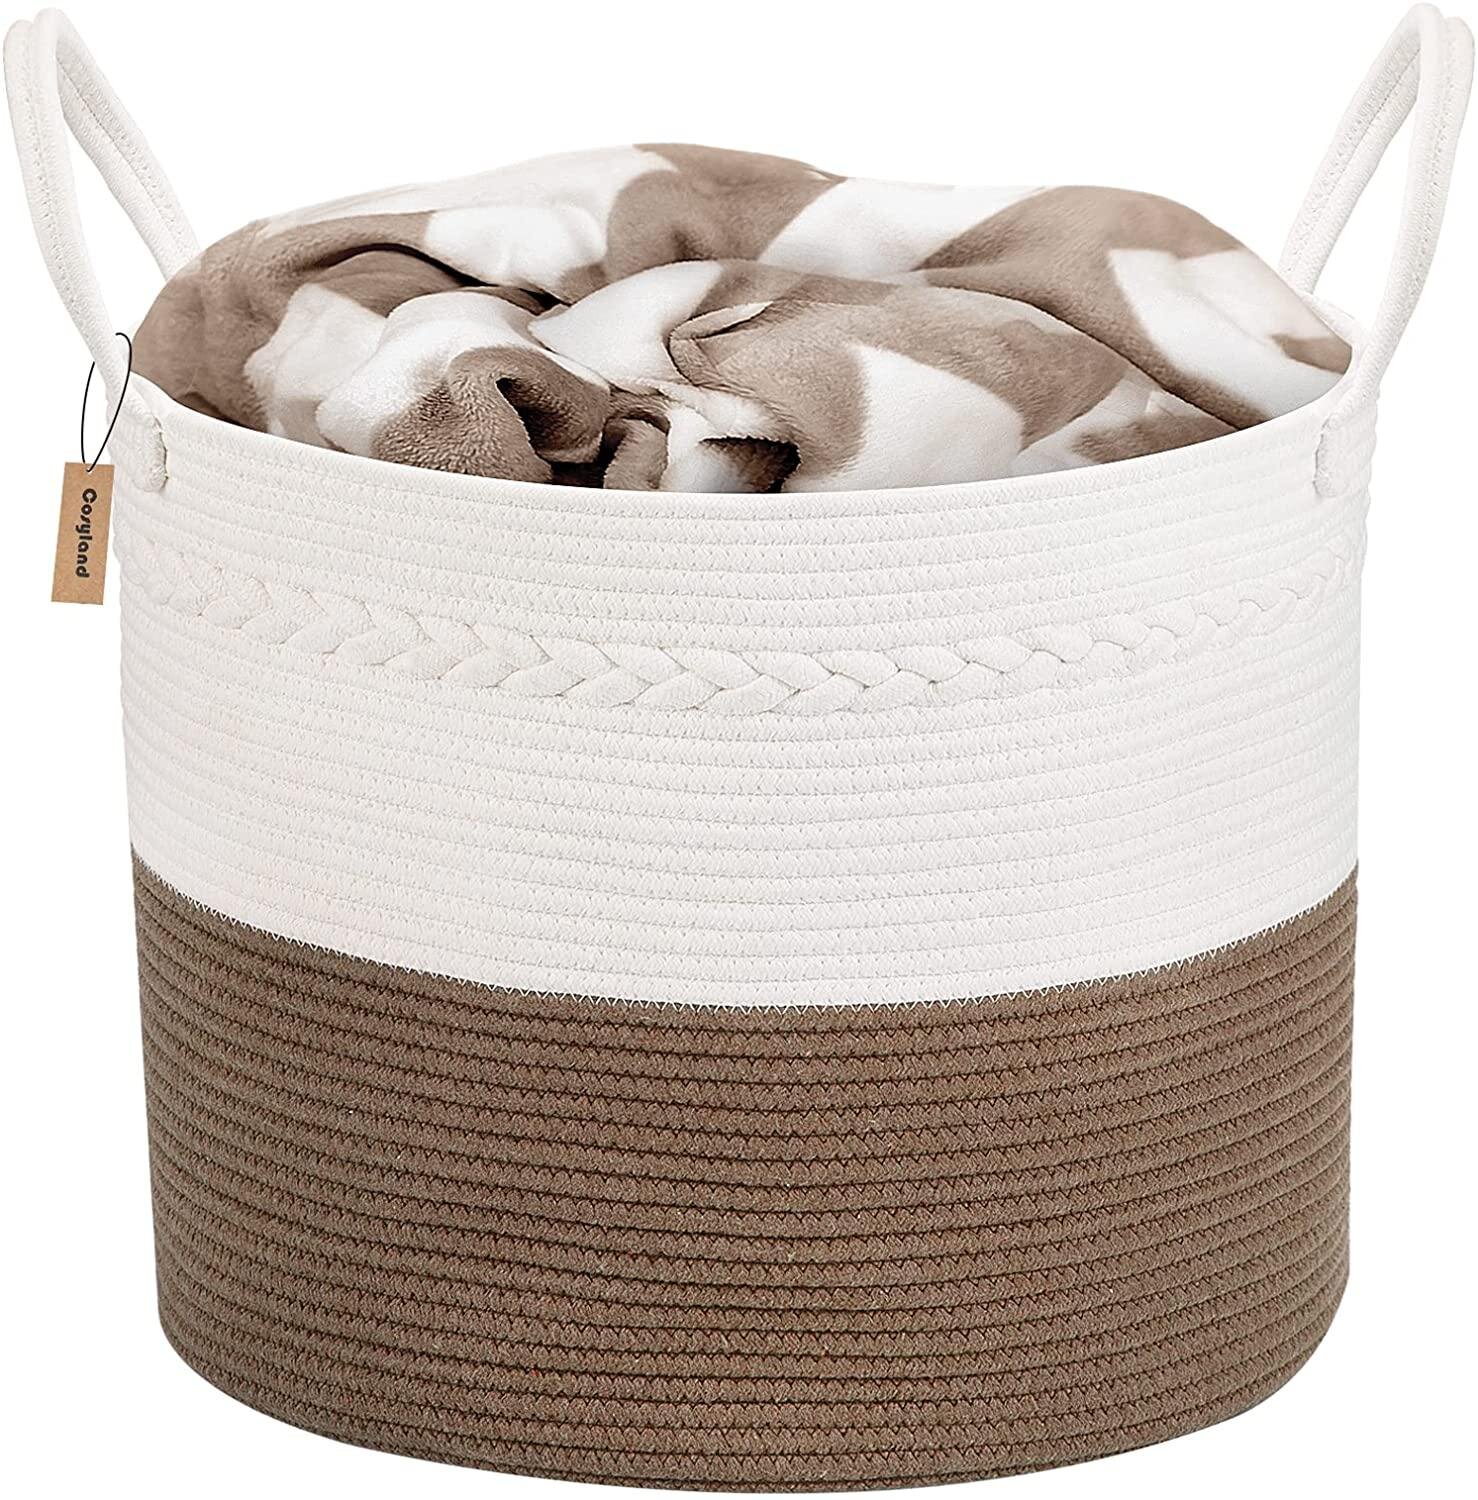 Laundry Hamper Basket Bin Storage Cotton Thread Woven Rope Clothes Toy Organizer